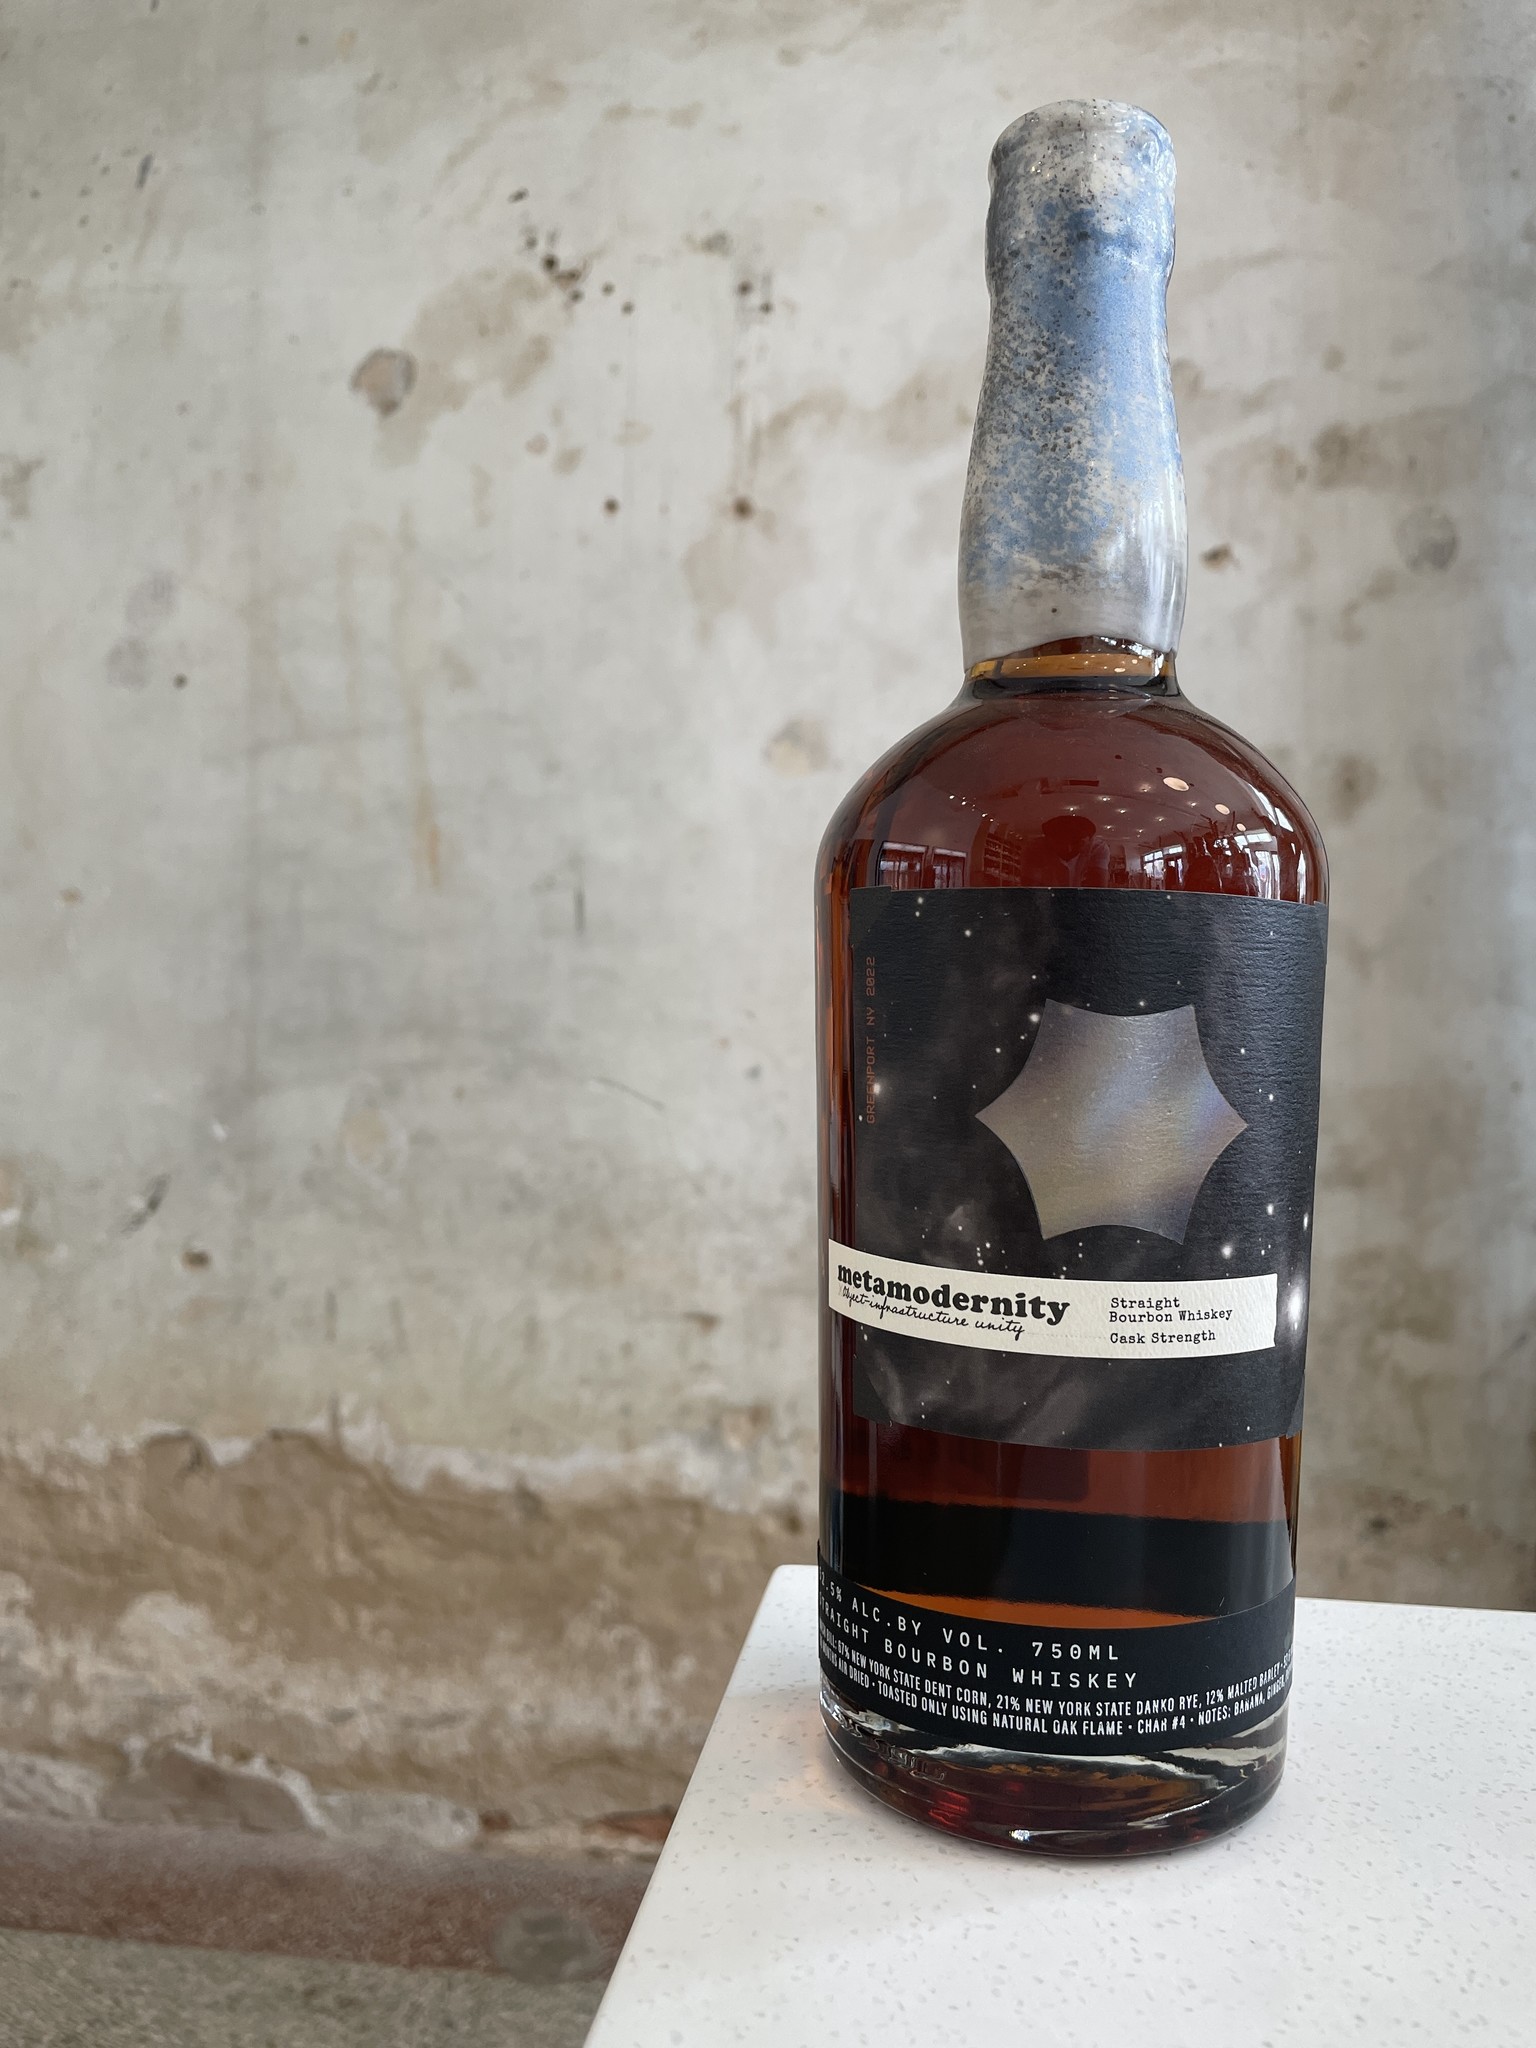 Matchbook Distilling Co. 'Metamodernity' Cask Strength Bourbon